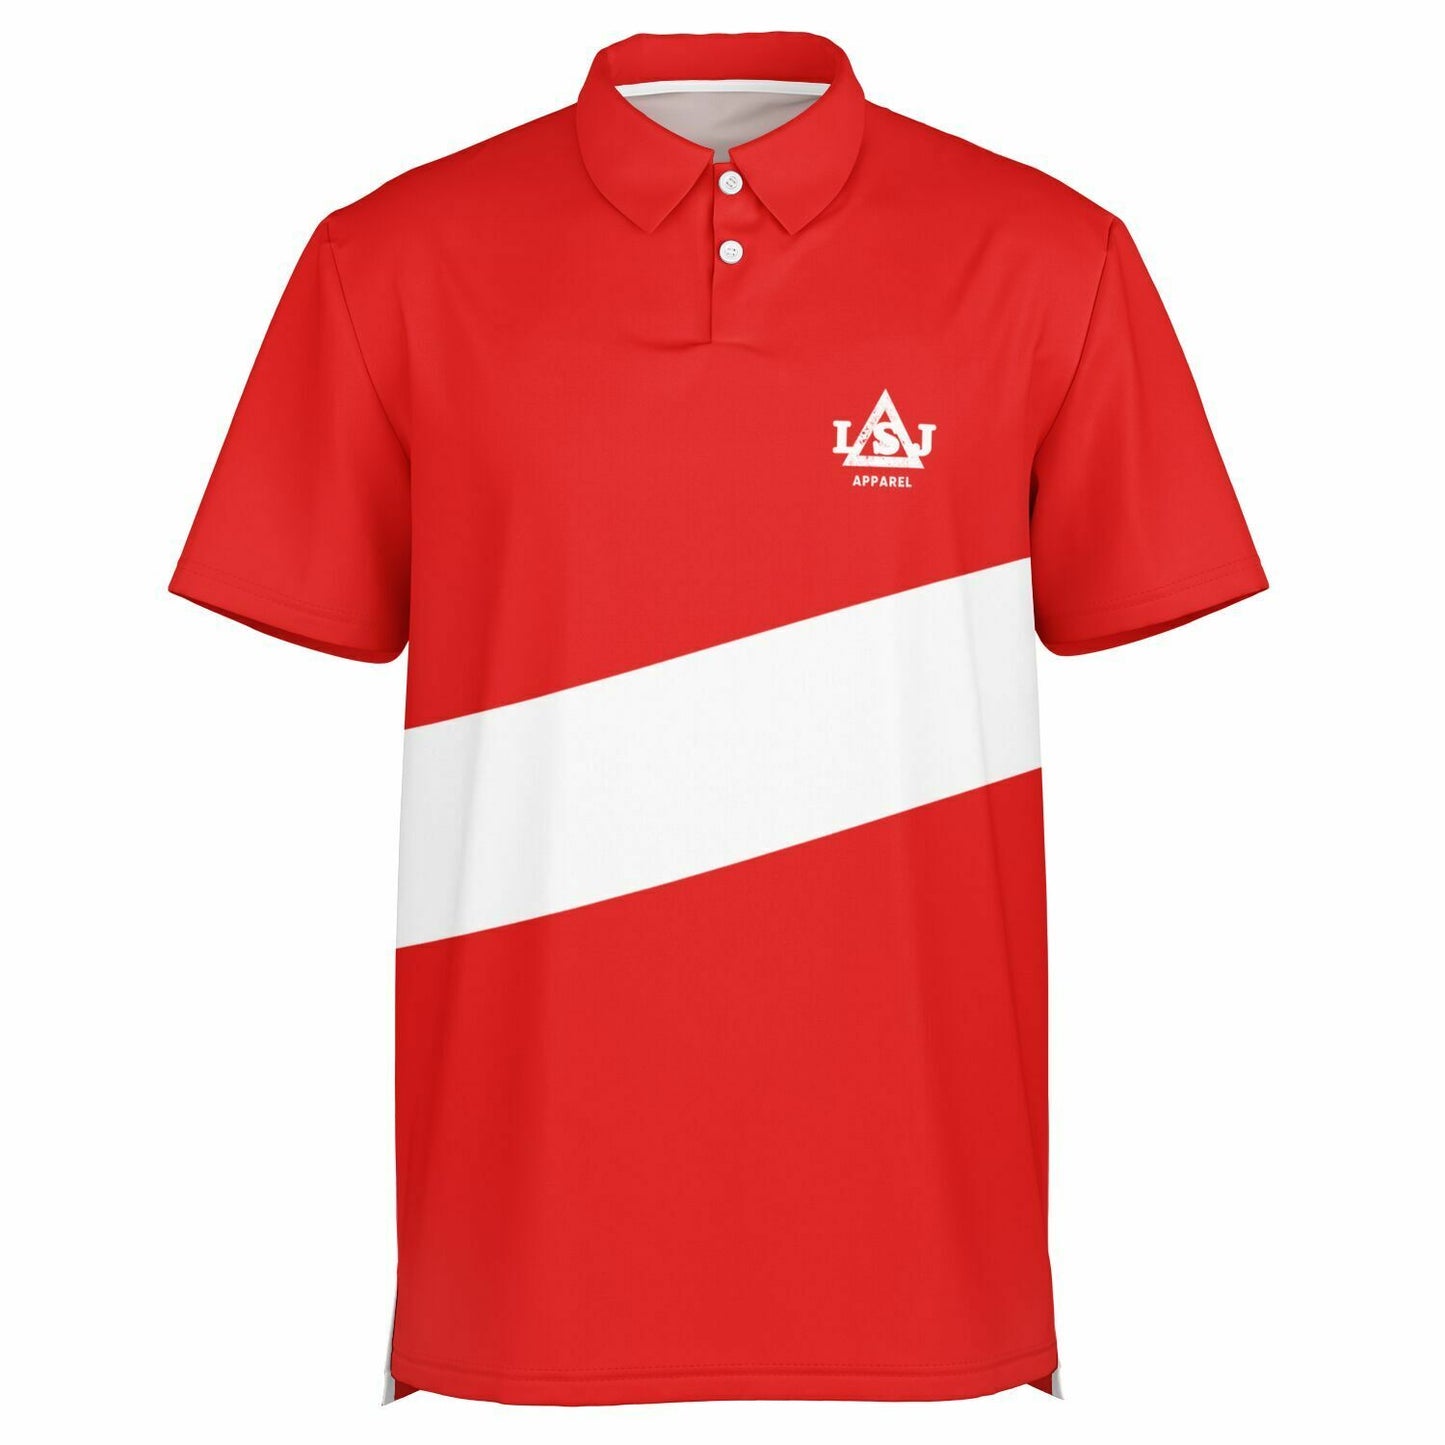 LSJ Red & White Men's Polo Shirt